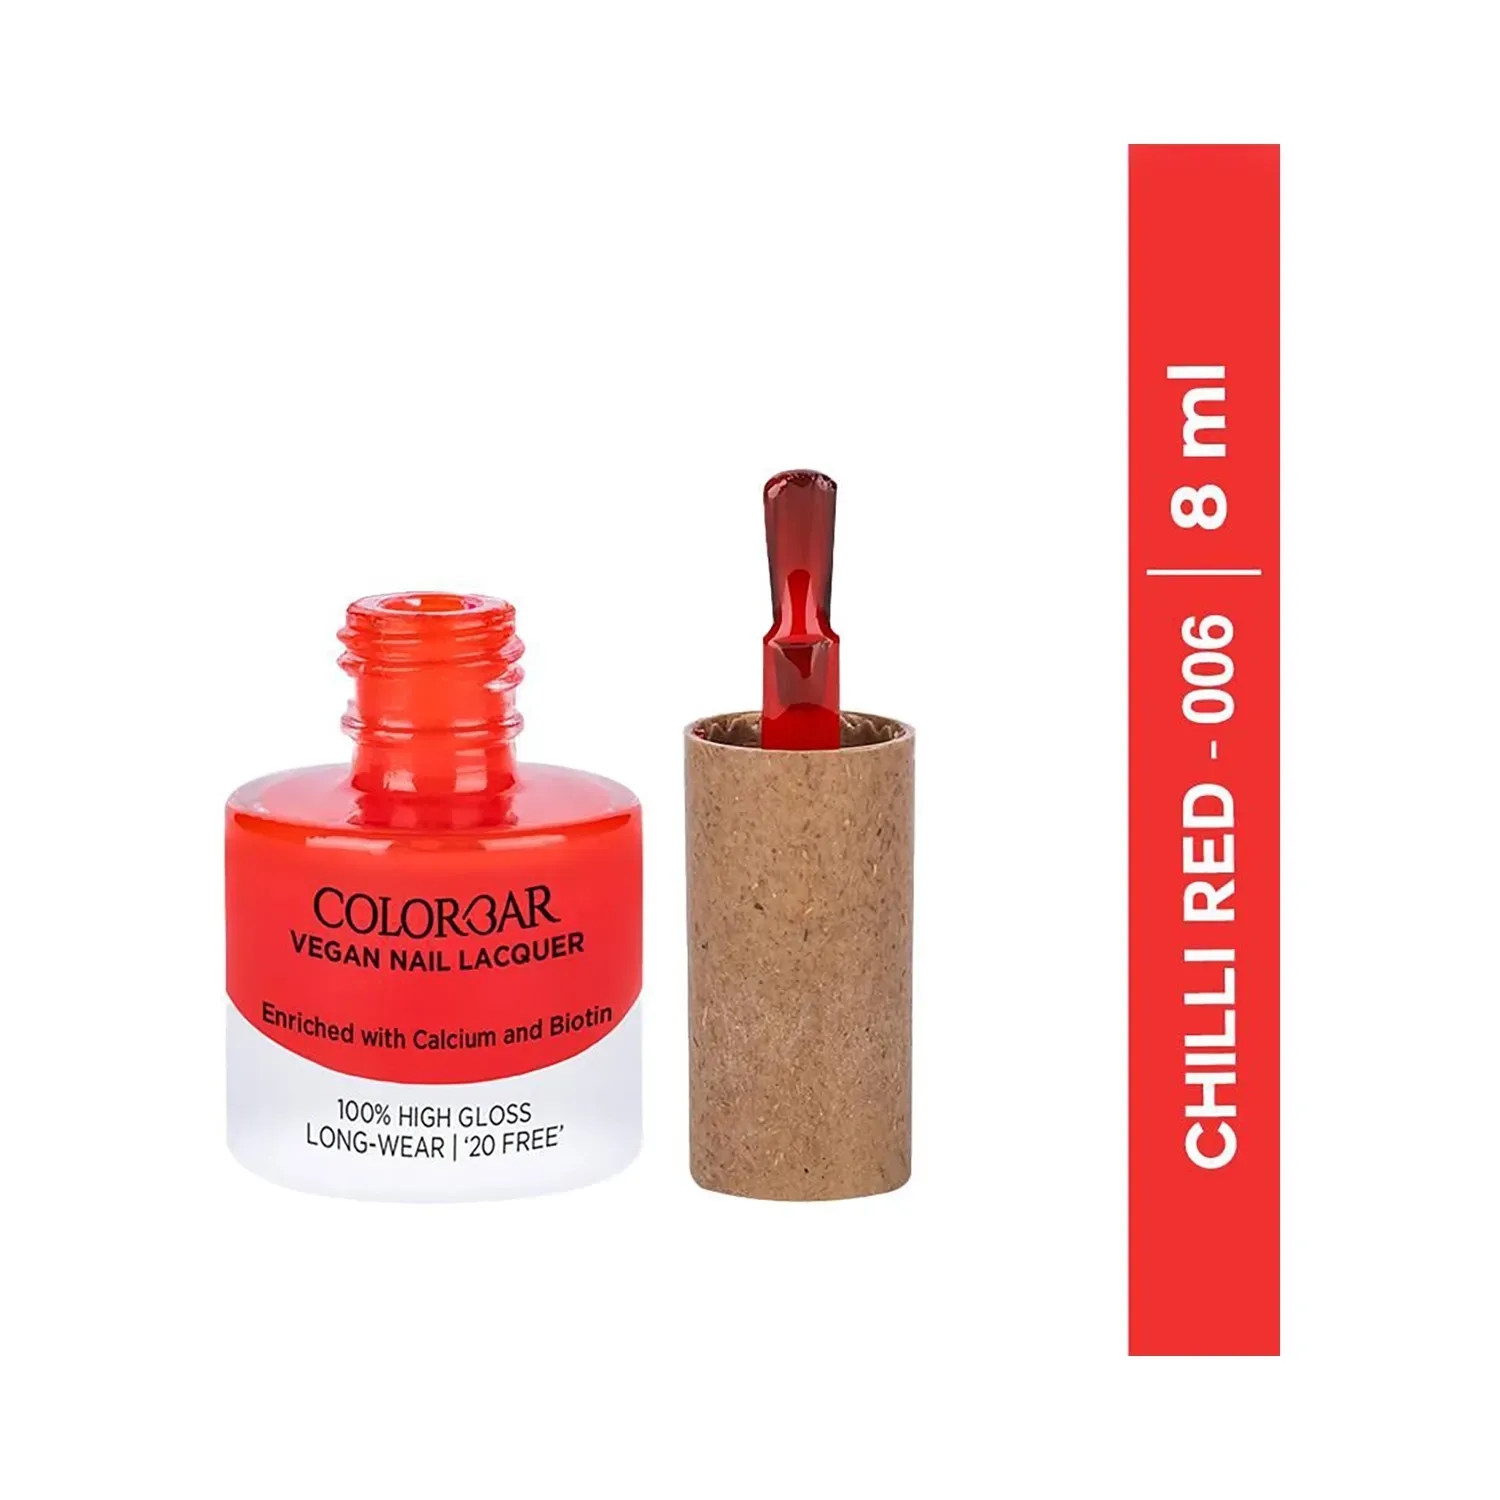 Colorbar | Colorbar Vegan Nail Lacquer - 006 Chilli Red (8ml)